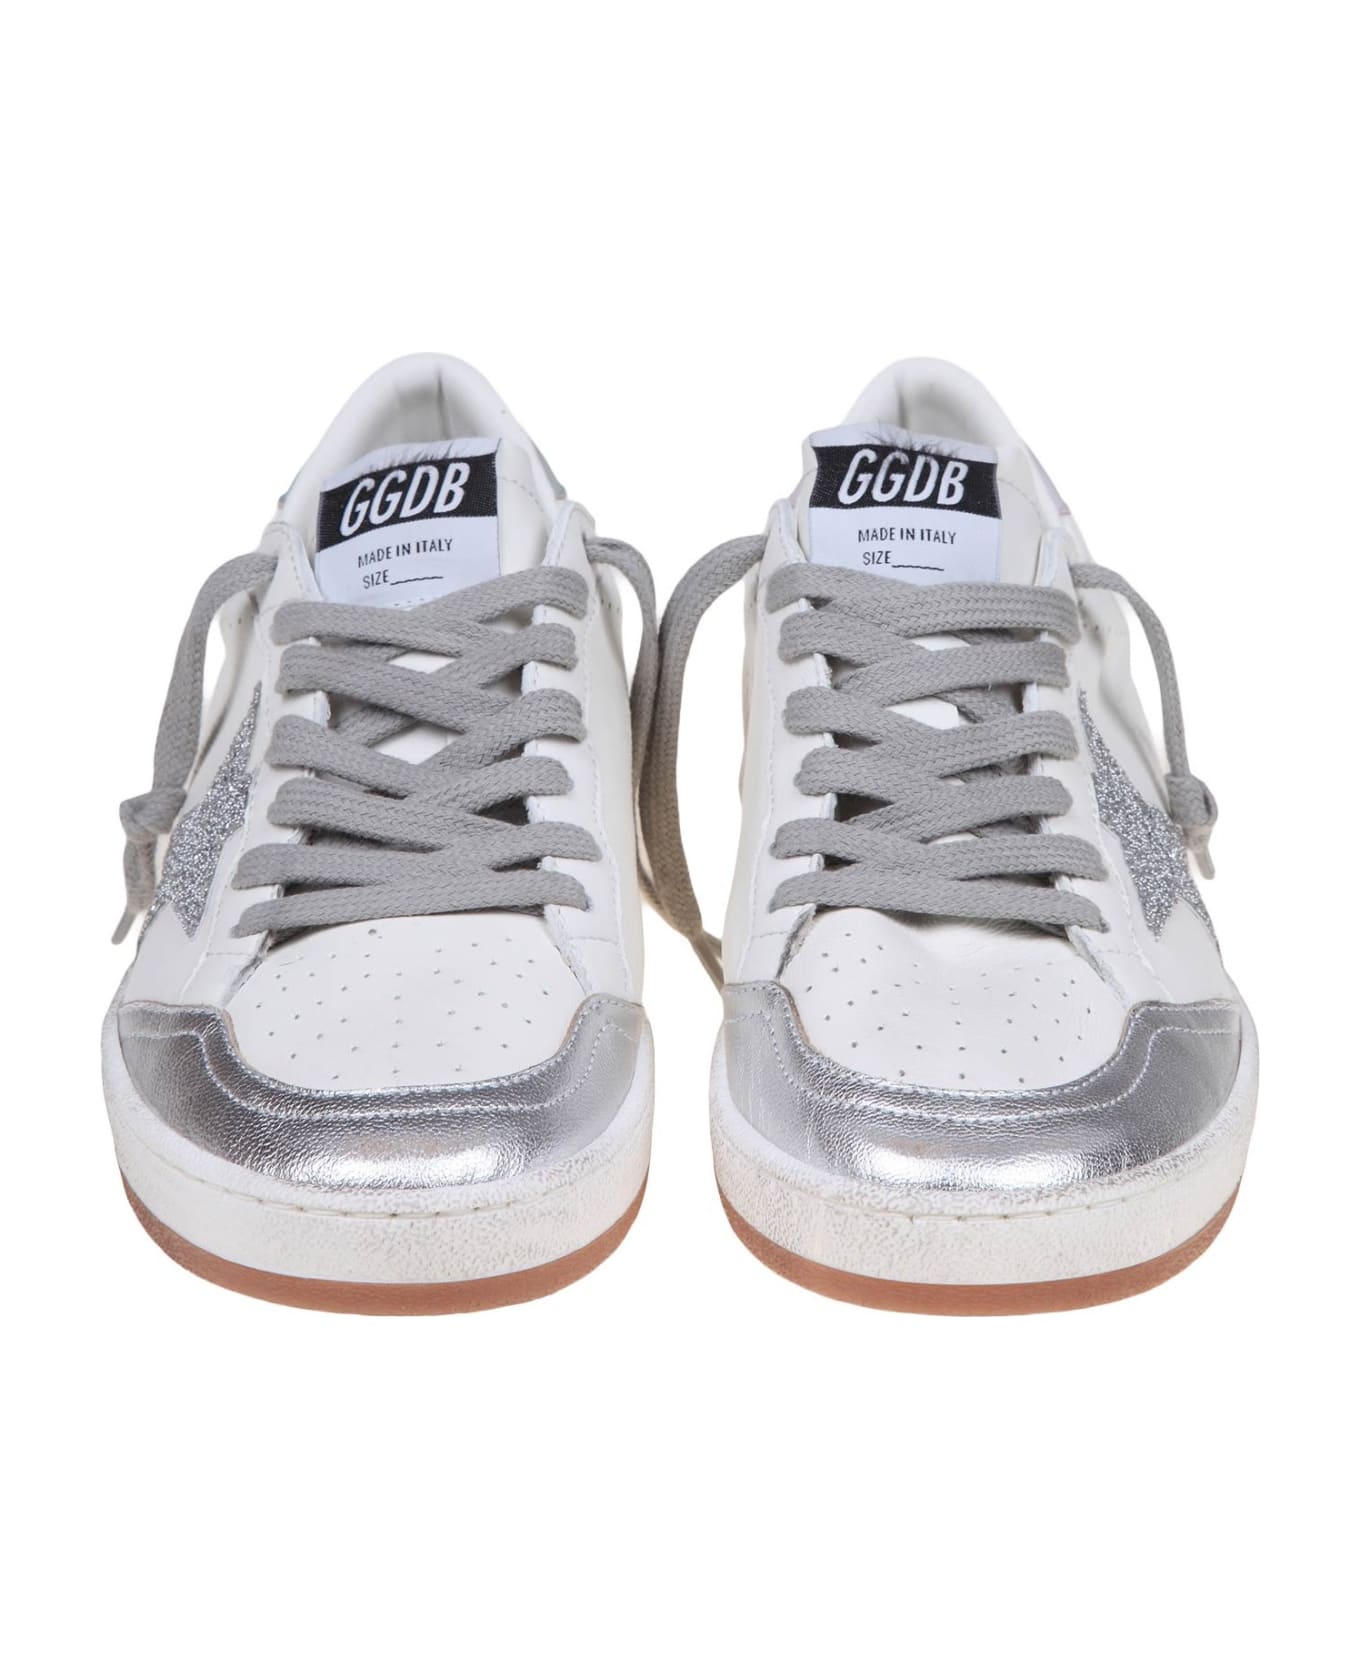 Golden Goose Ball-star Sneakers - White/Silver